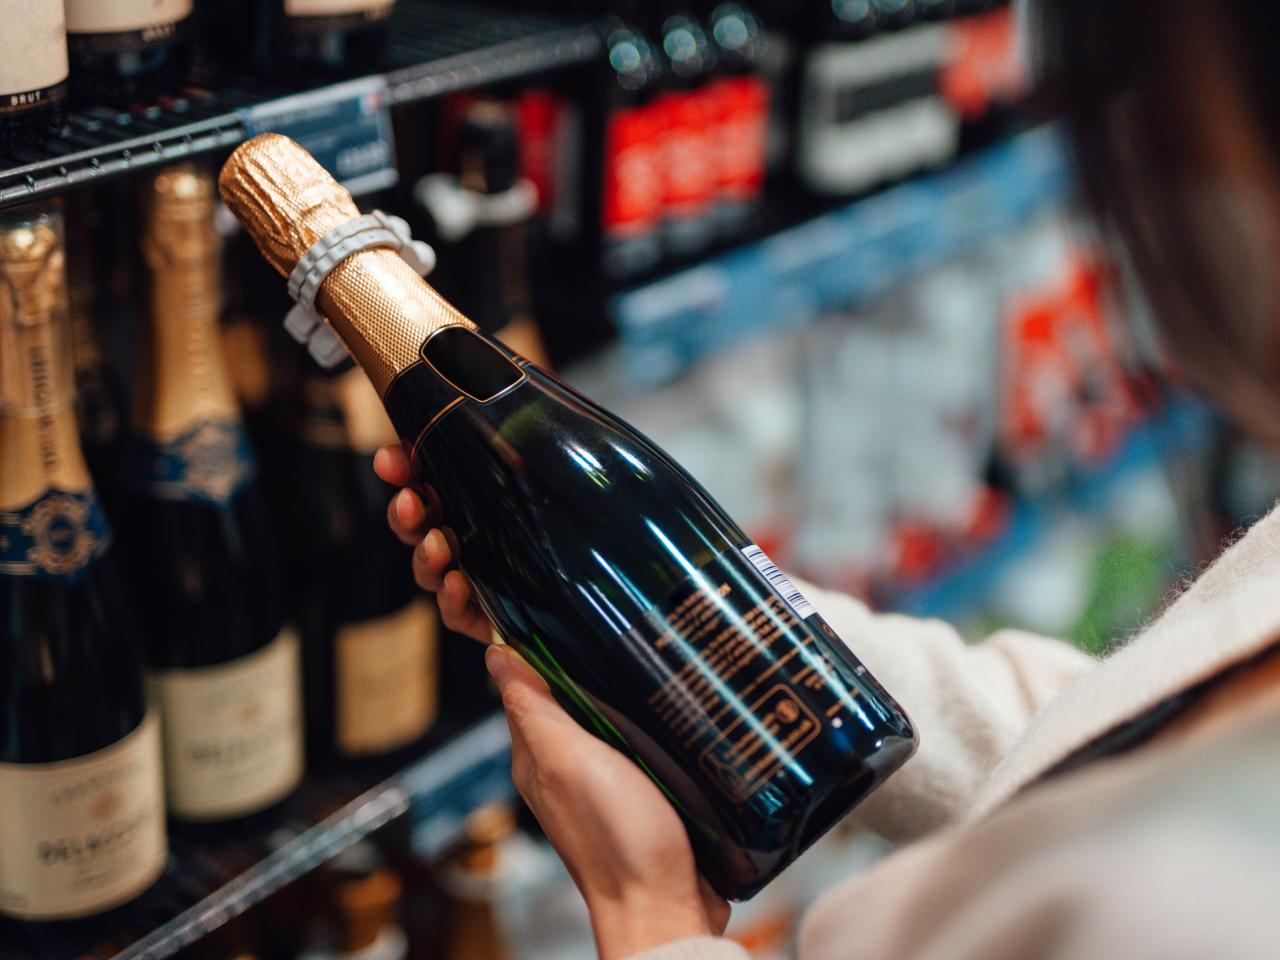 Wine Review Online - Exploring Champagne's Non-Vintage Classics